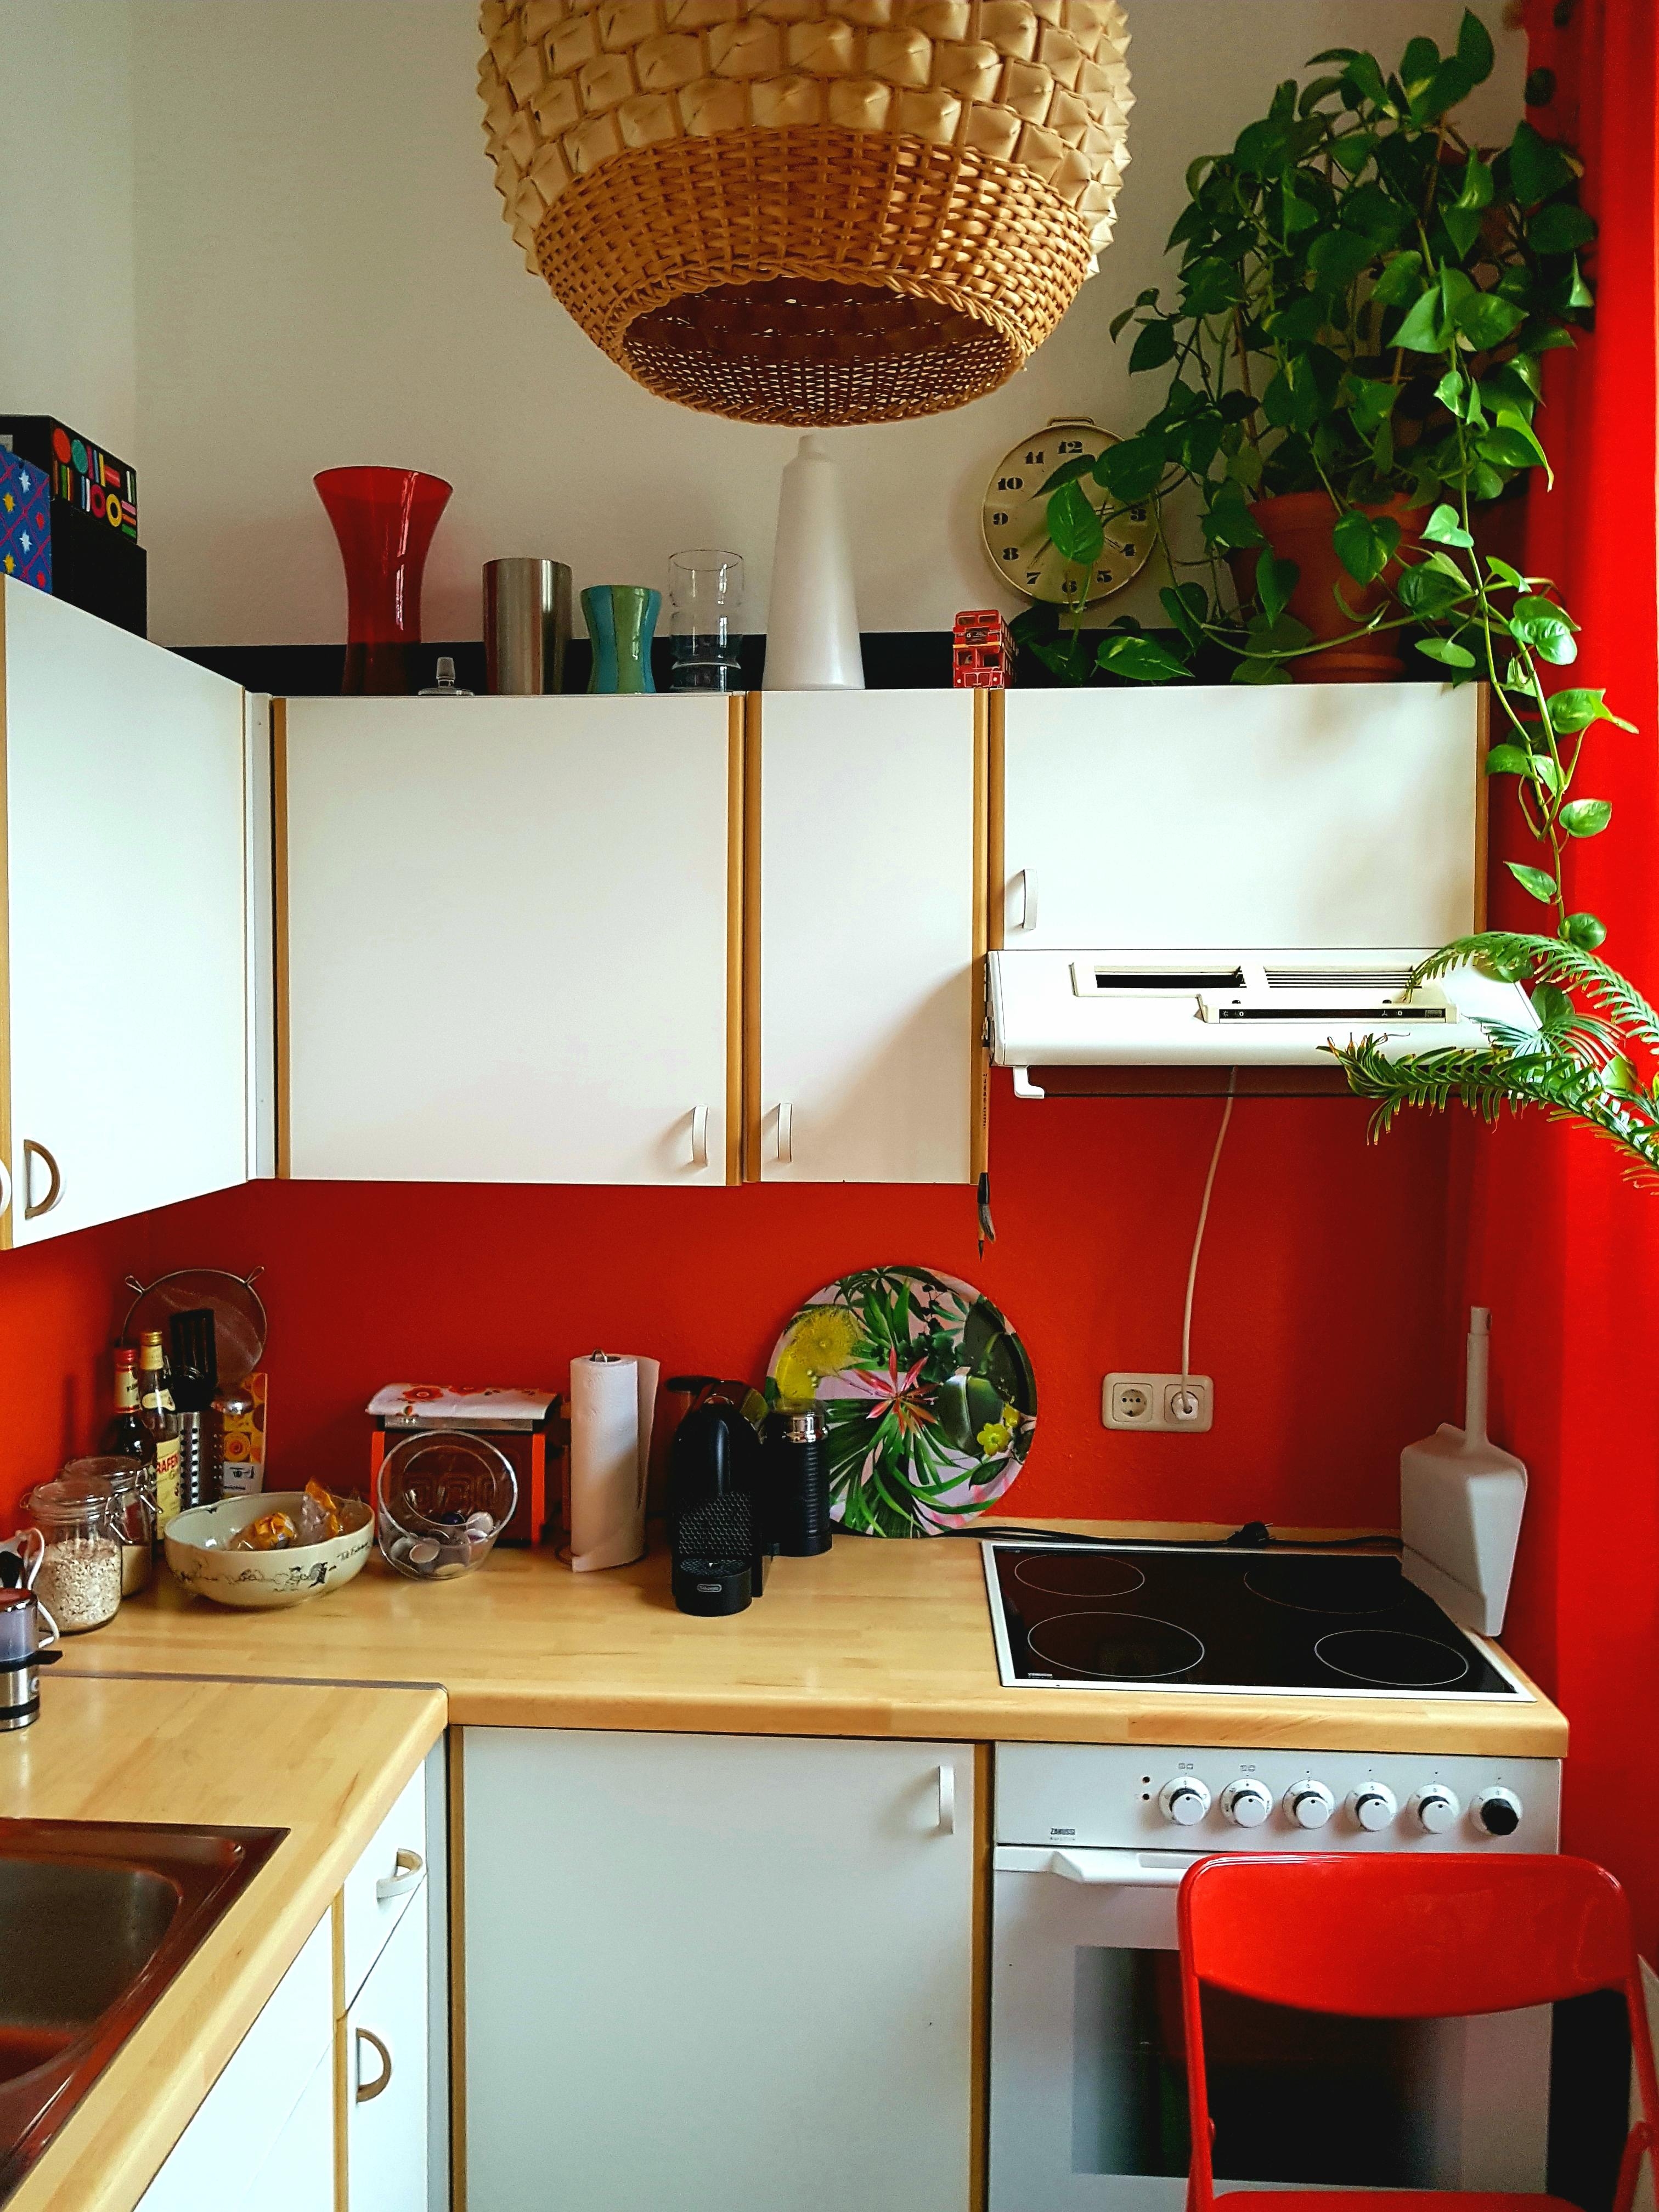 #colourblocking #smallroom #red #white #orange #nespresso #urbanjungle #vintage #ikea 
#kitchen #küche